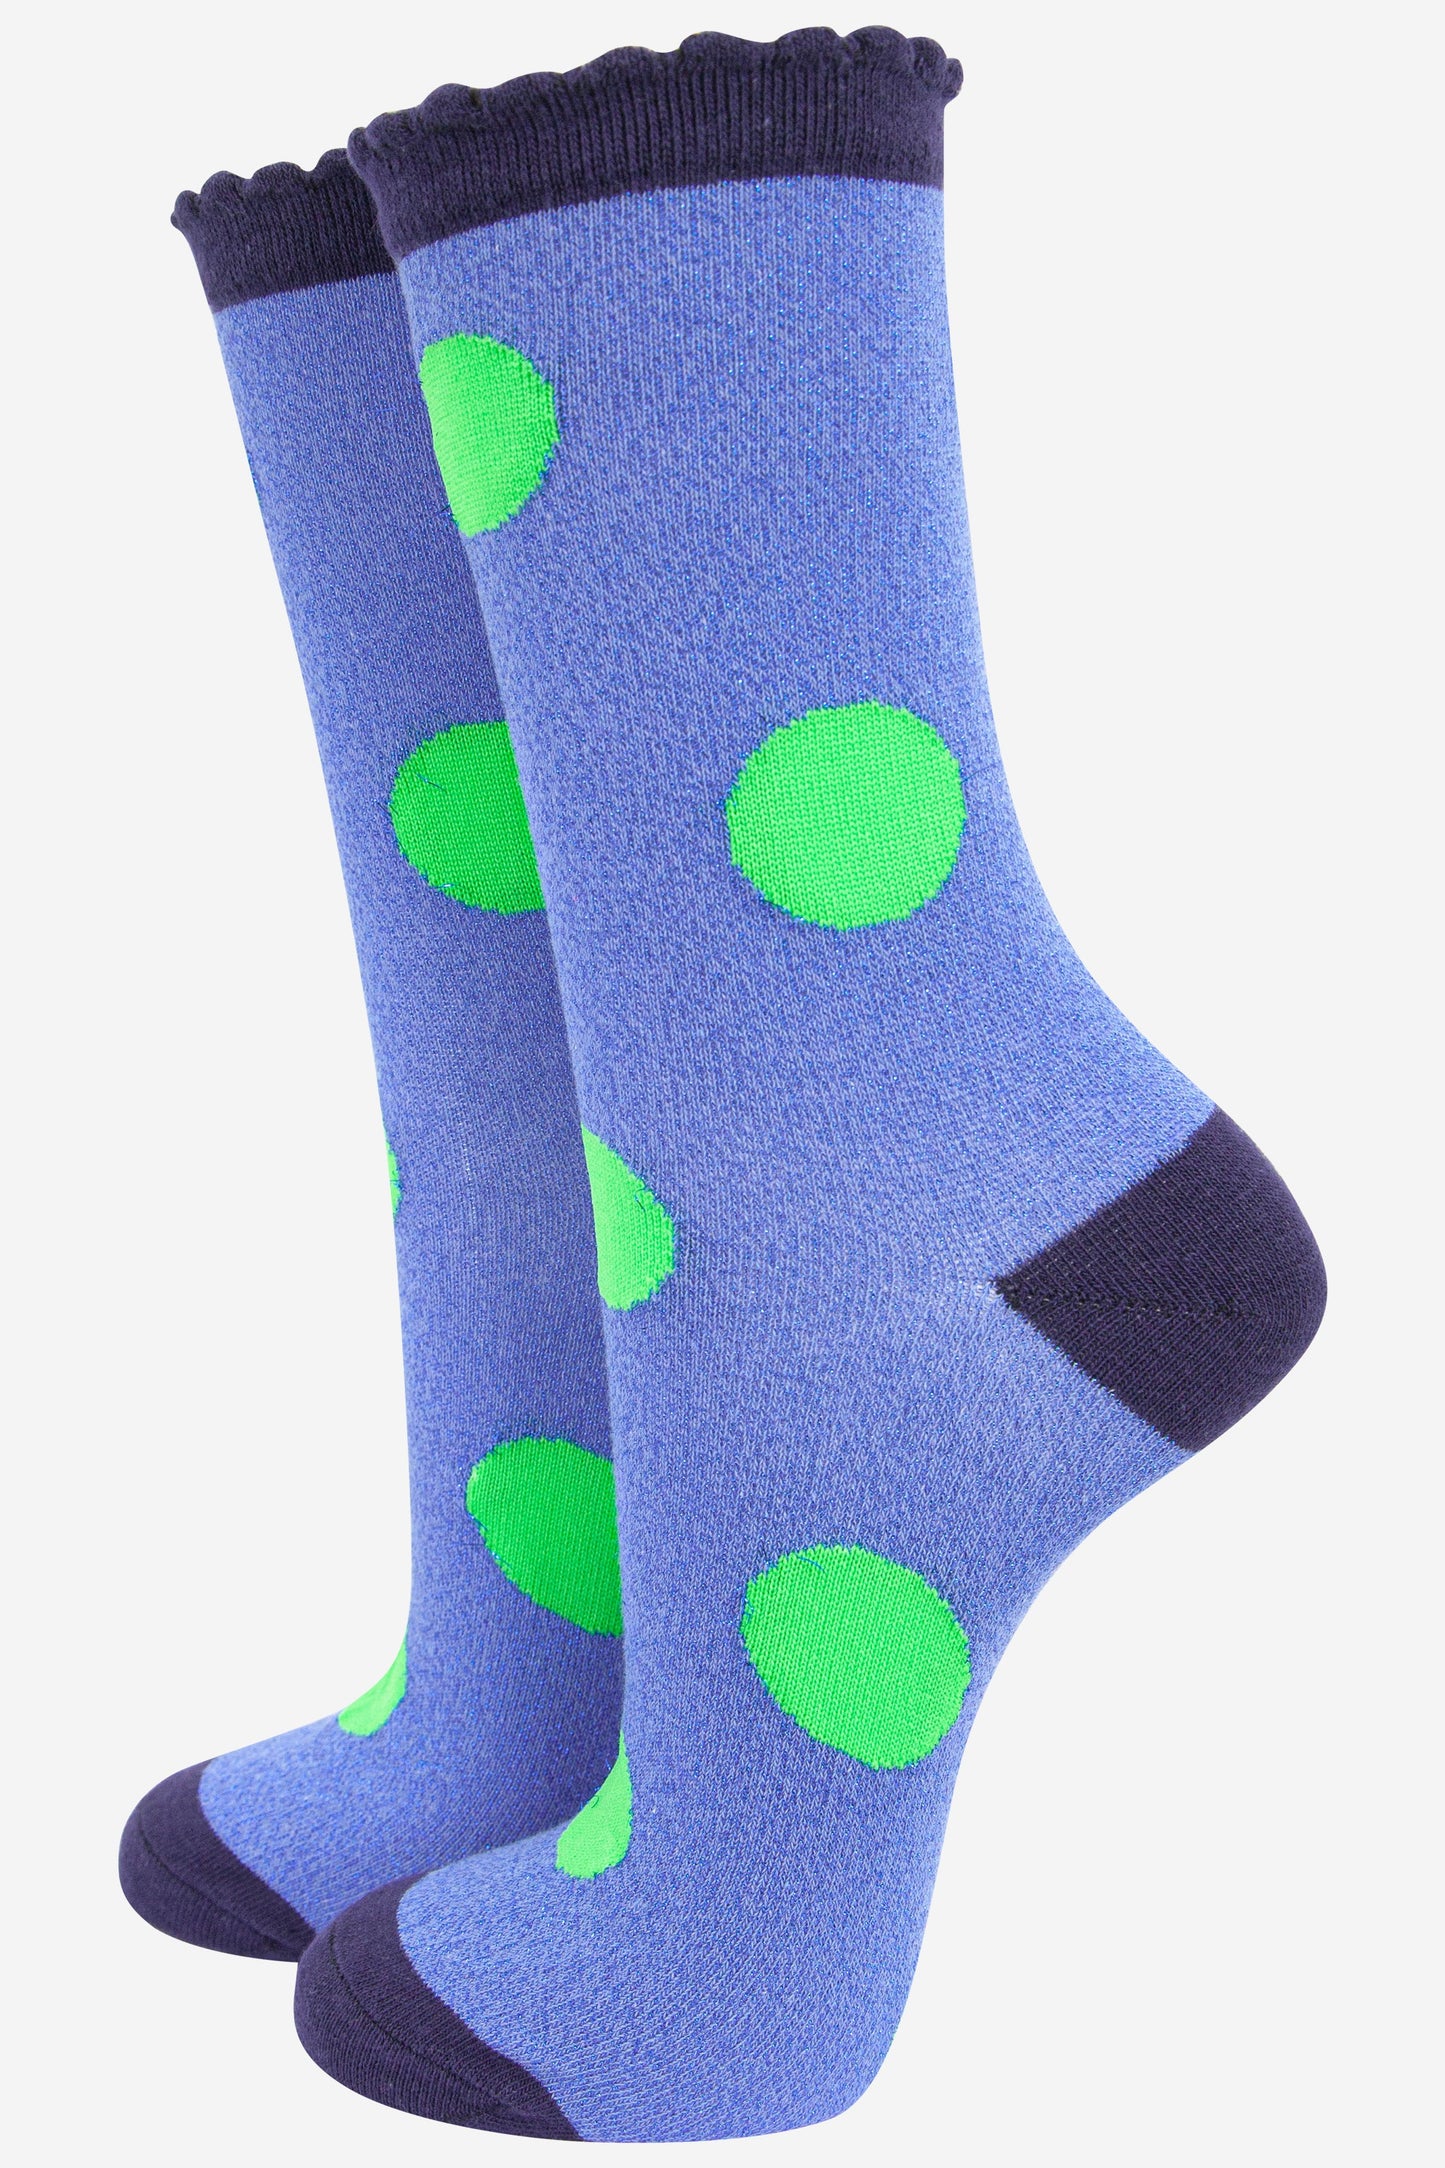 denim blue glitter socks with an all over large polka dot lime green pattern 